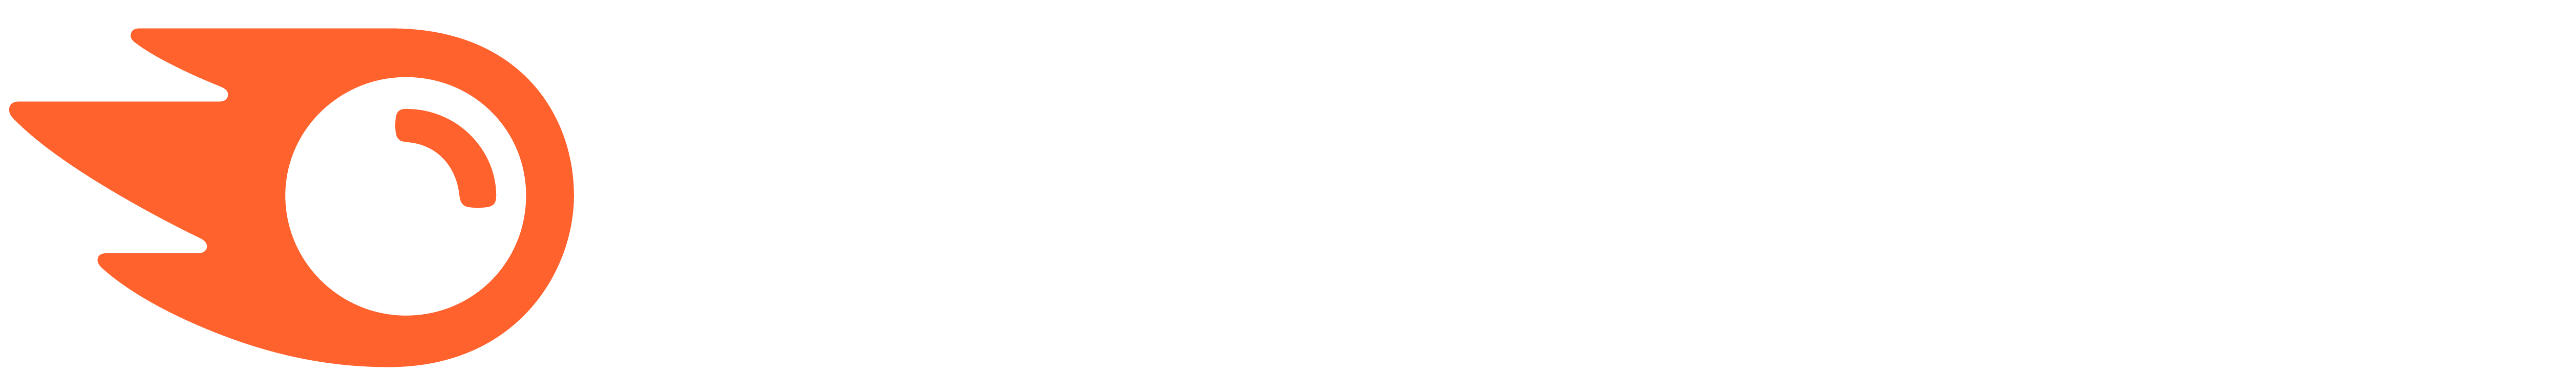 Semrush Newsroom logo